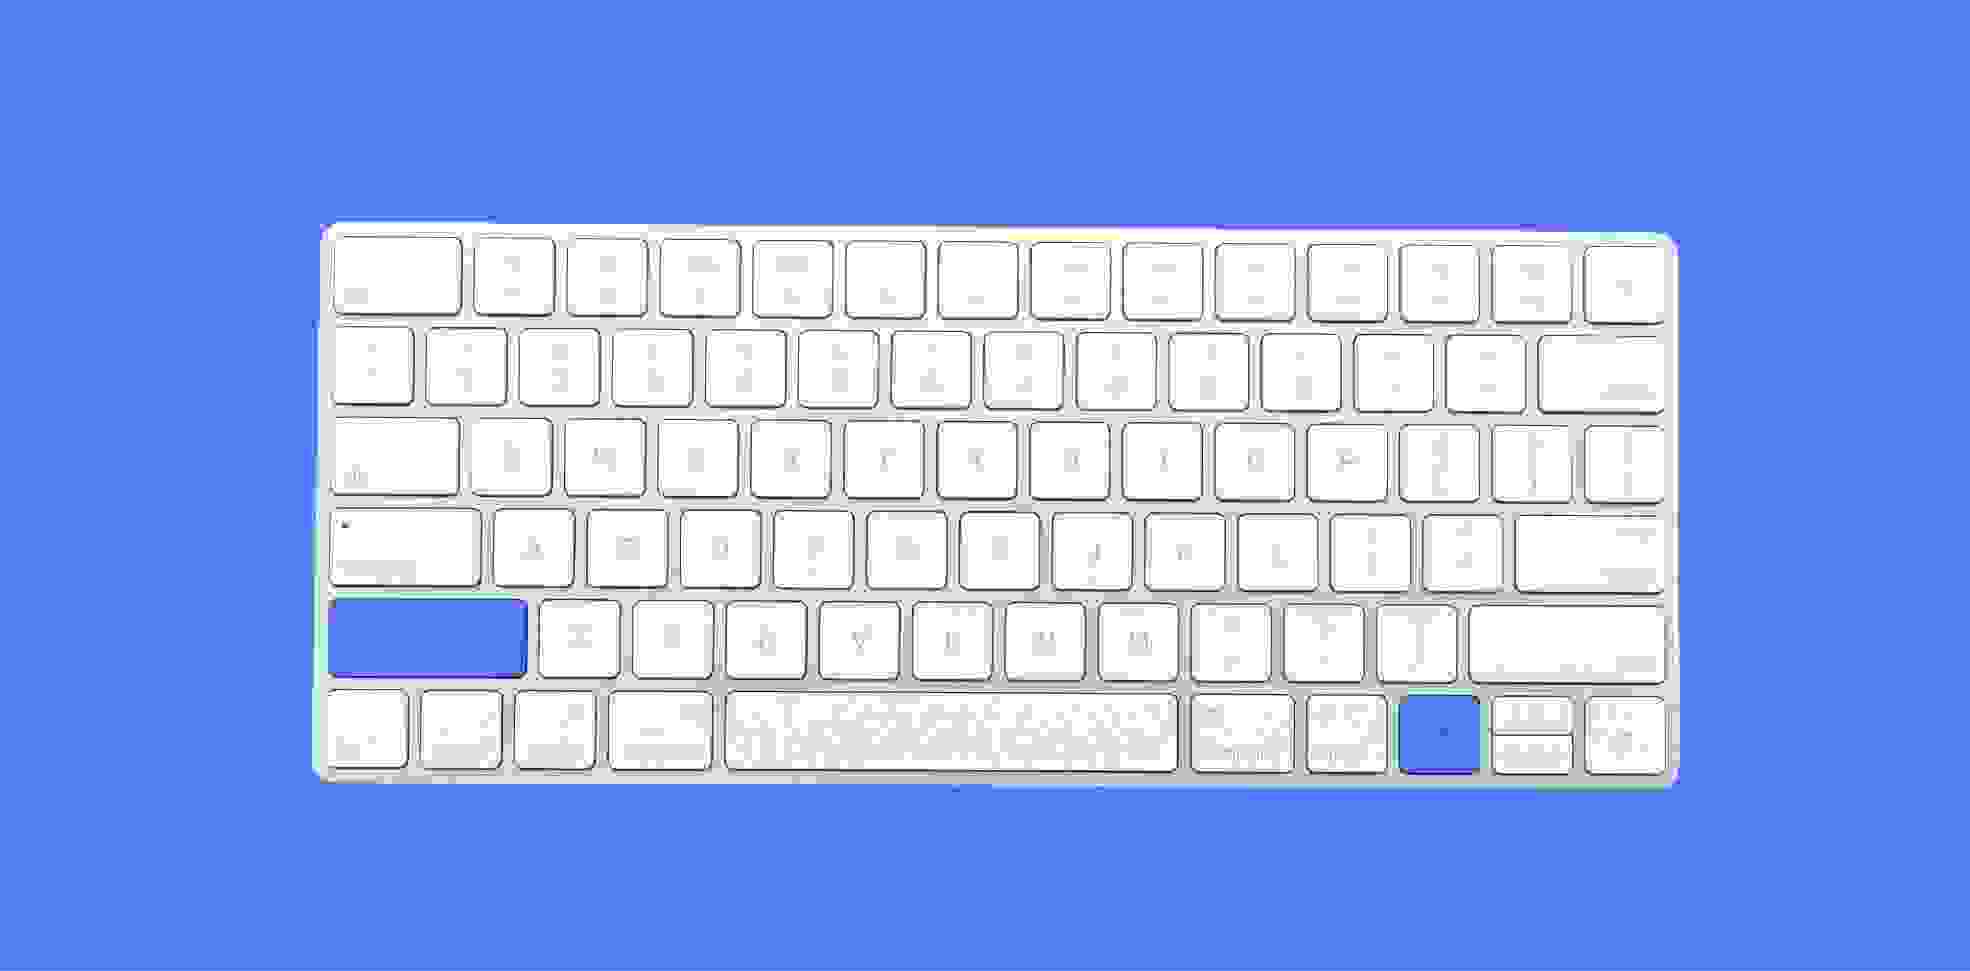 keyboard on blue background